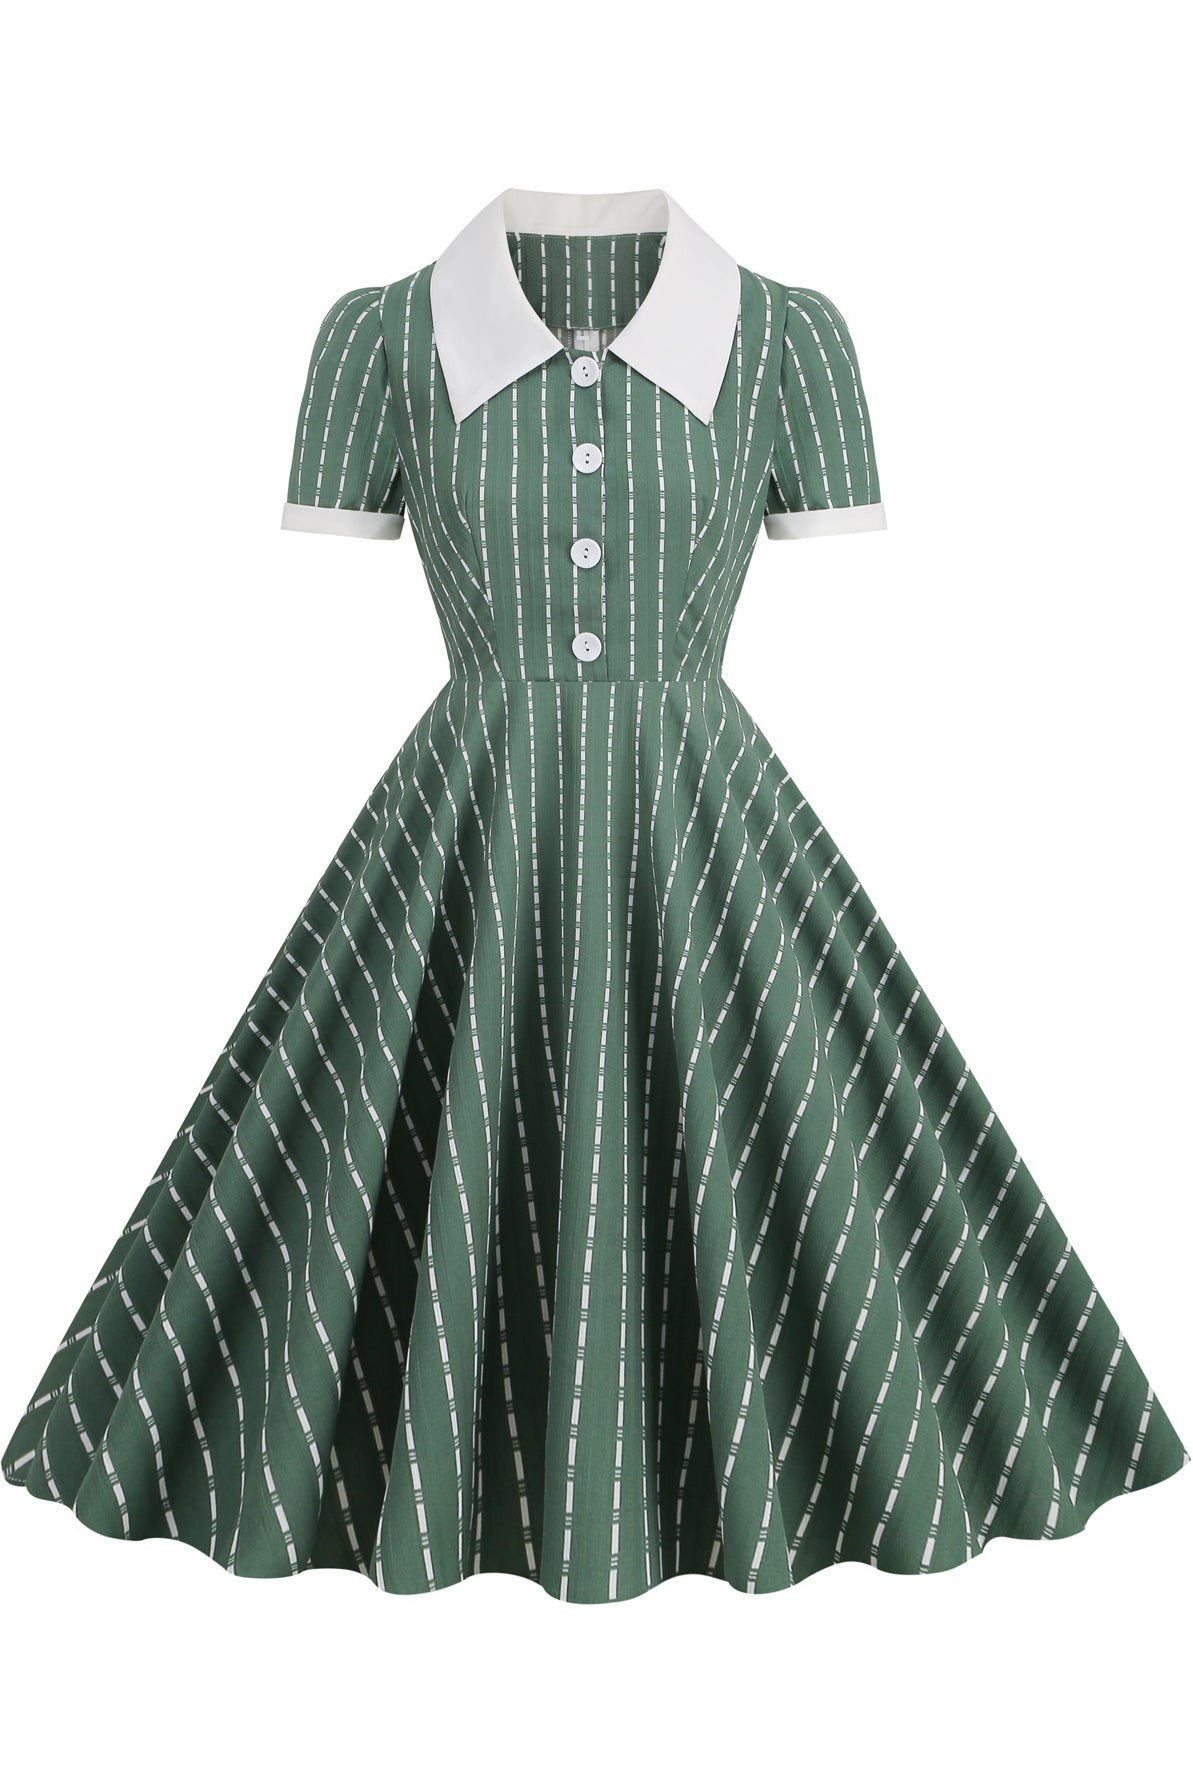 Herbene Green Striped Shirt Collar Dress with Short Sleeves